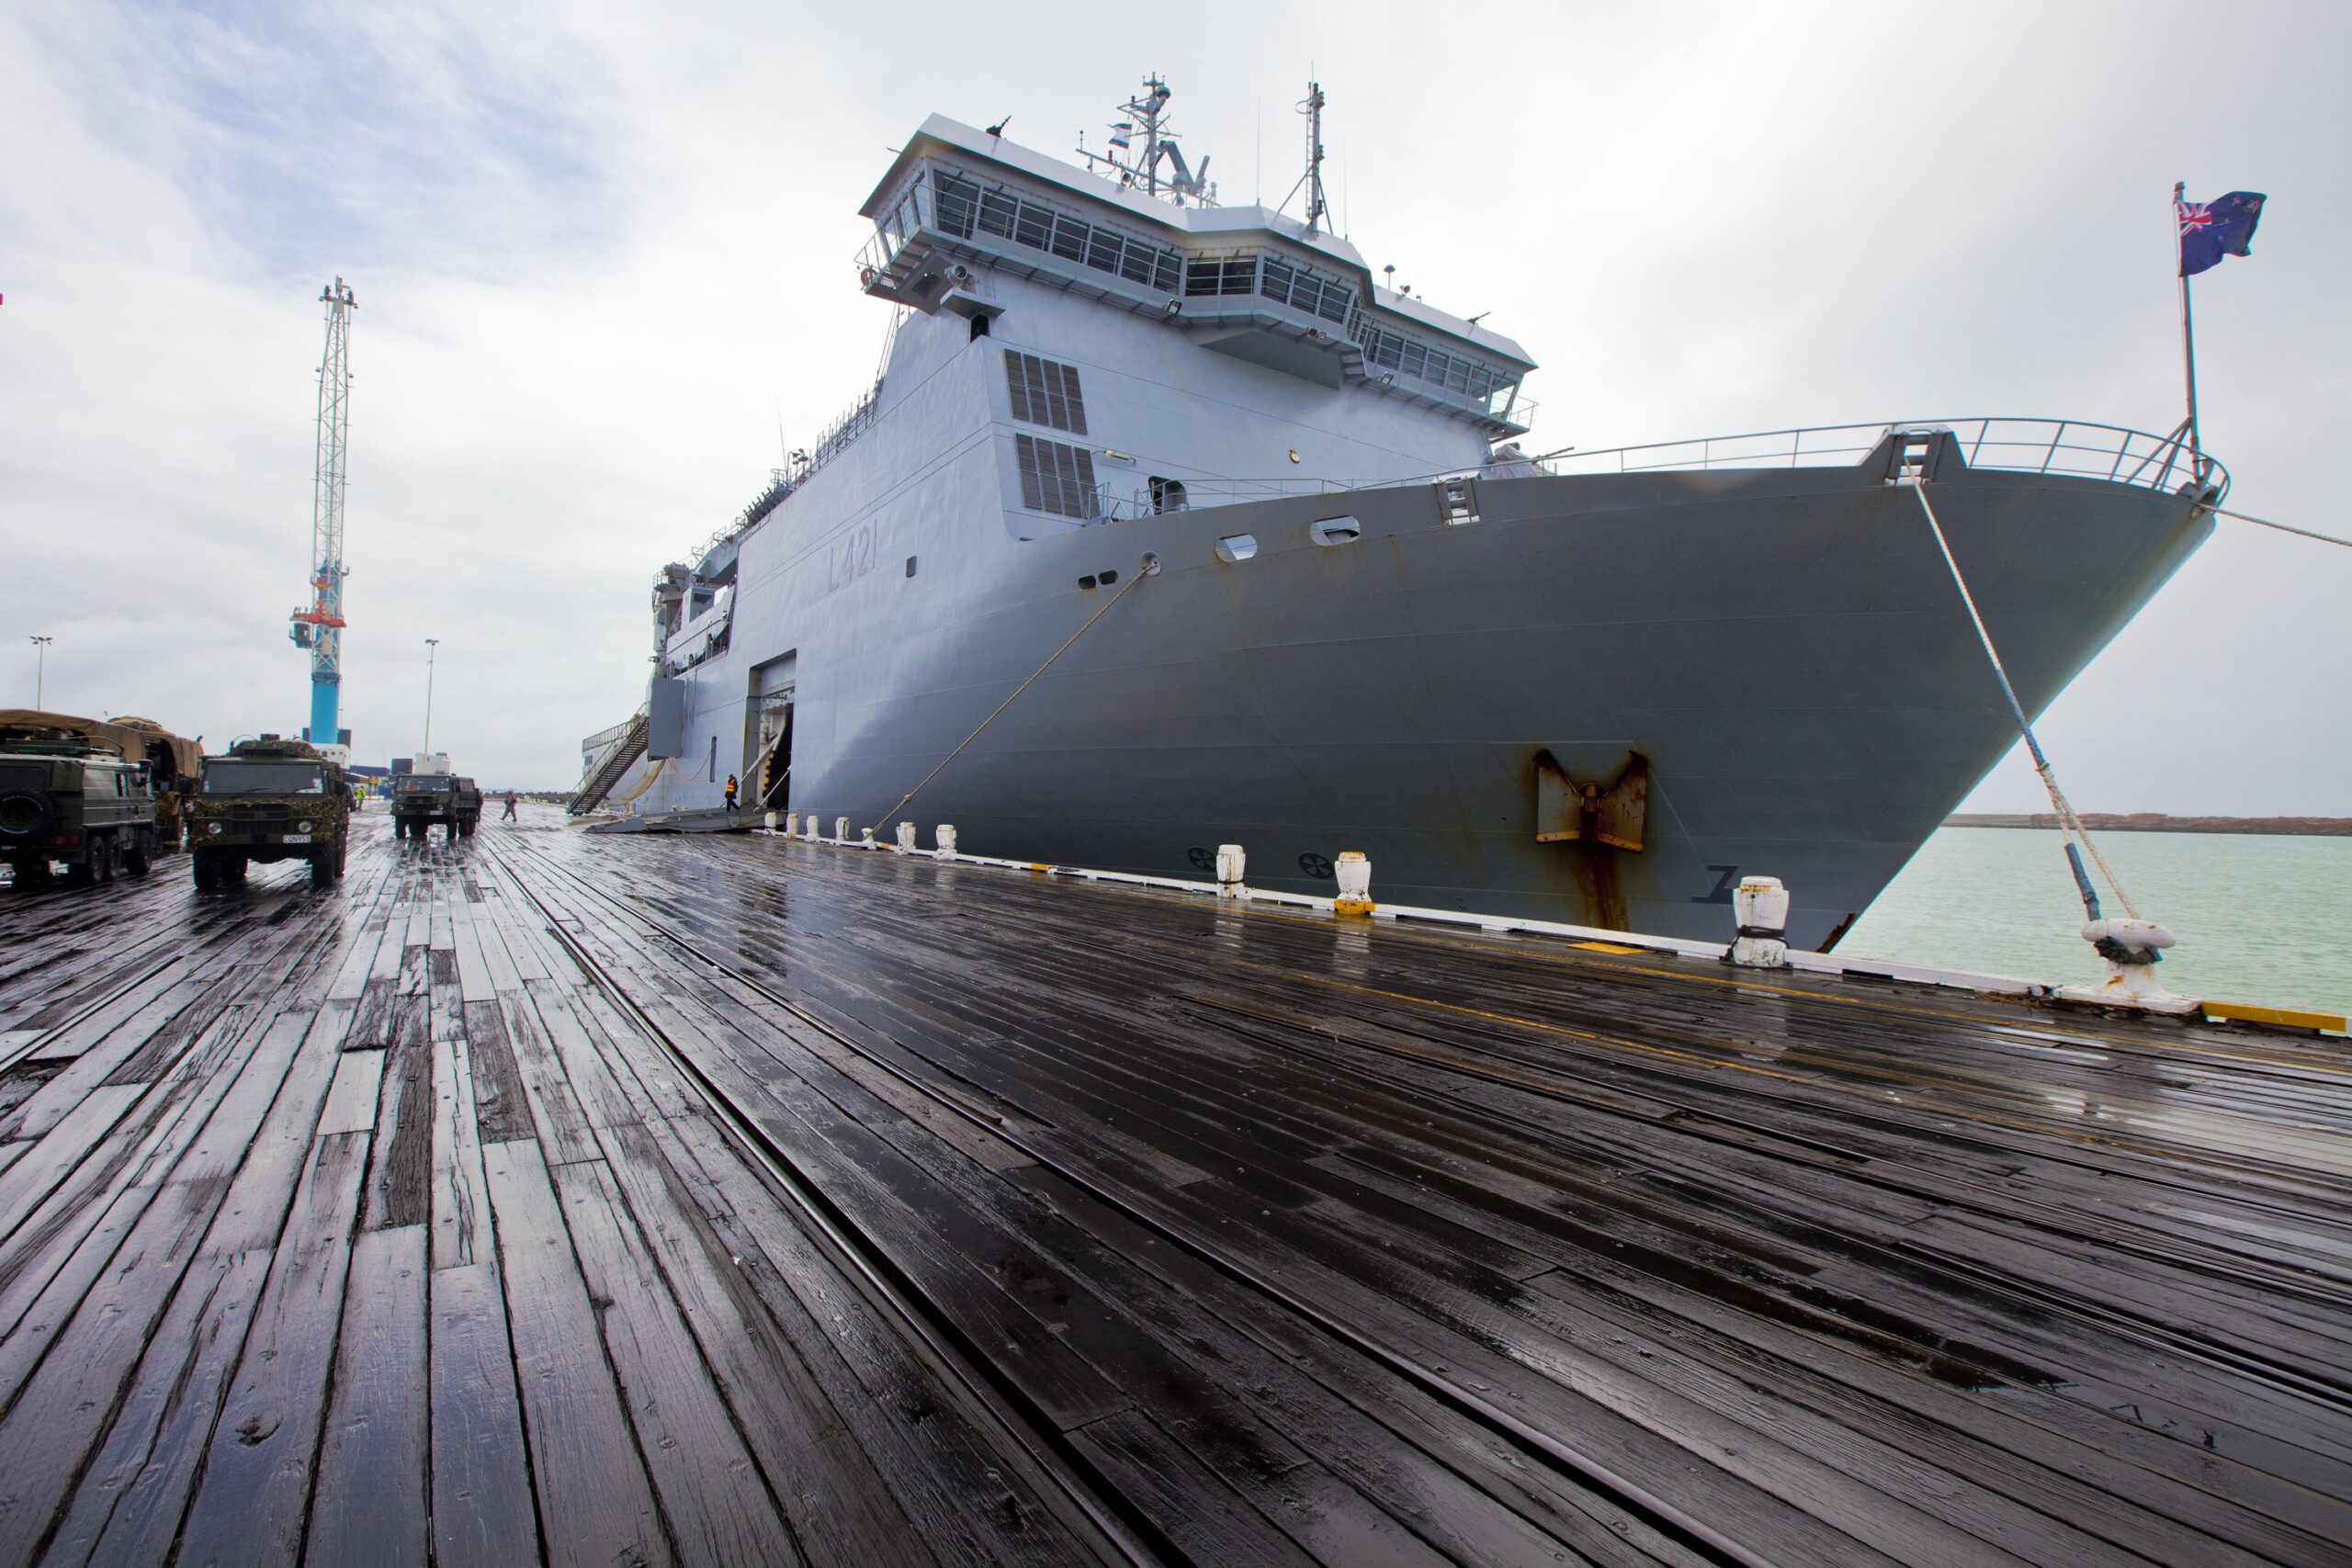 New Zealand warship HMNZS Canterbury